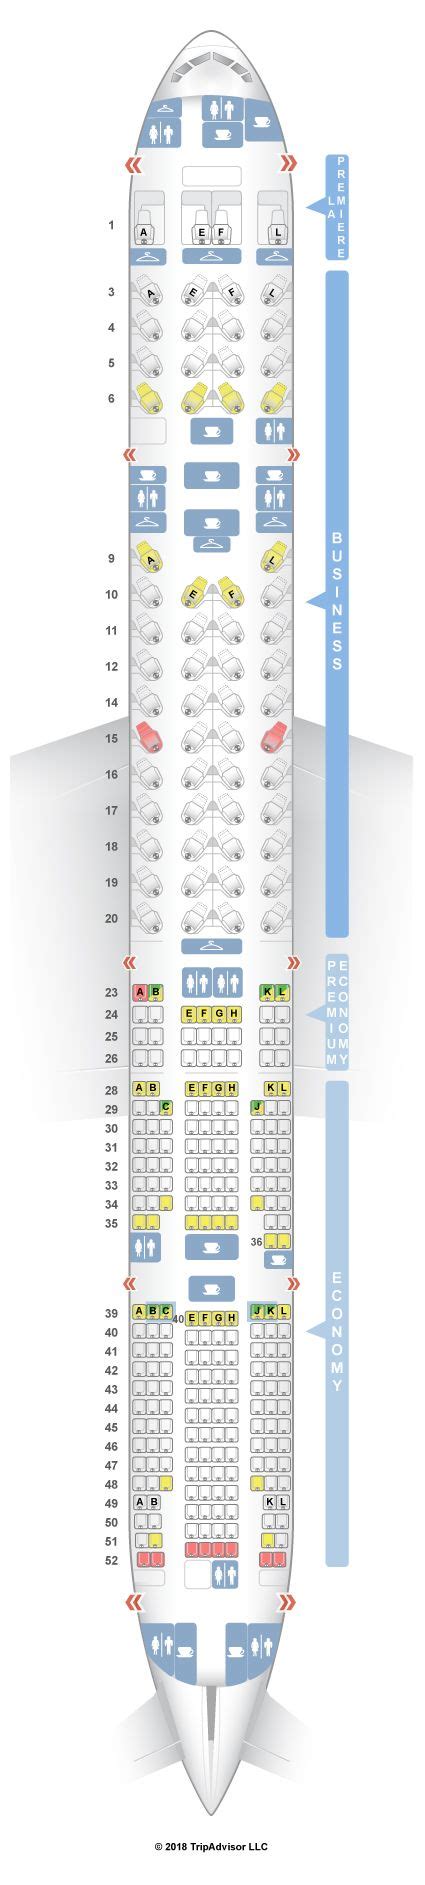 Seatguru Seat Map Air France Boeing 777 300er 77w Four Class V1